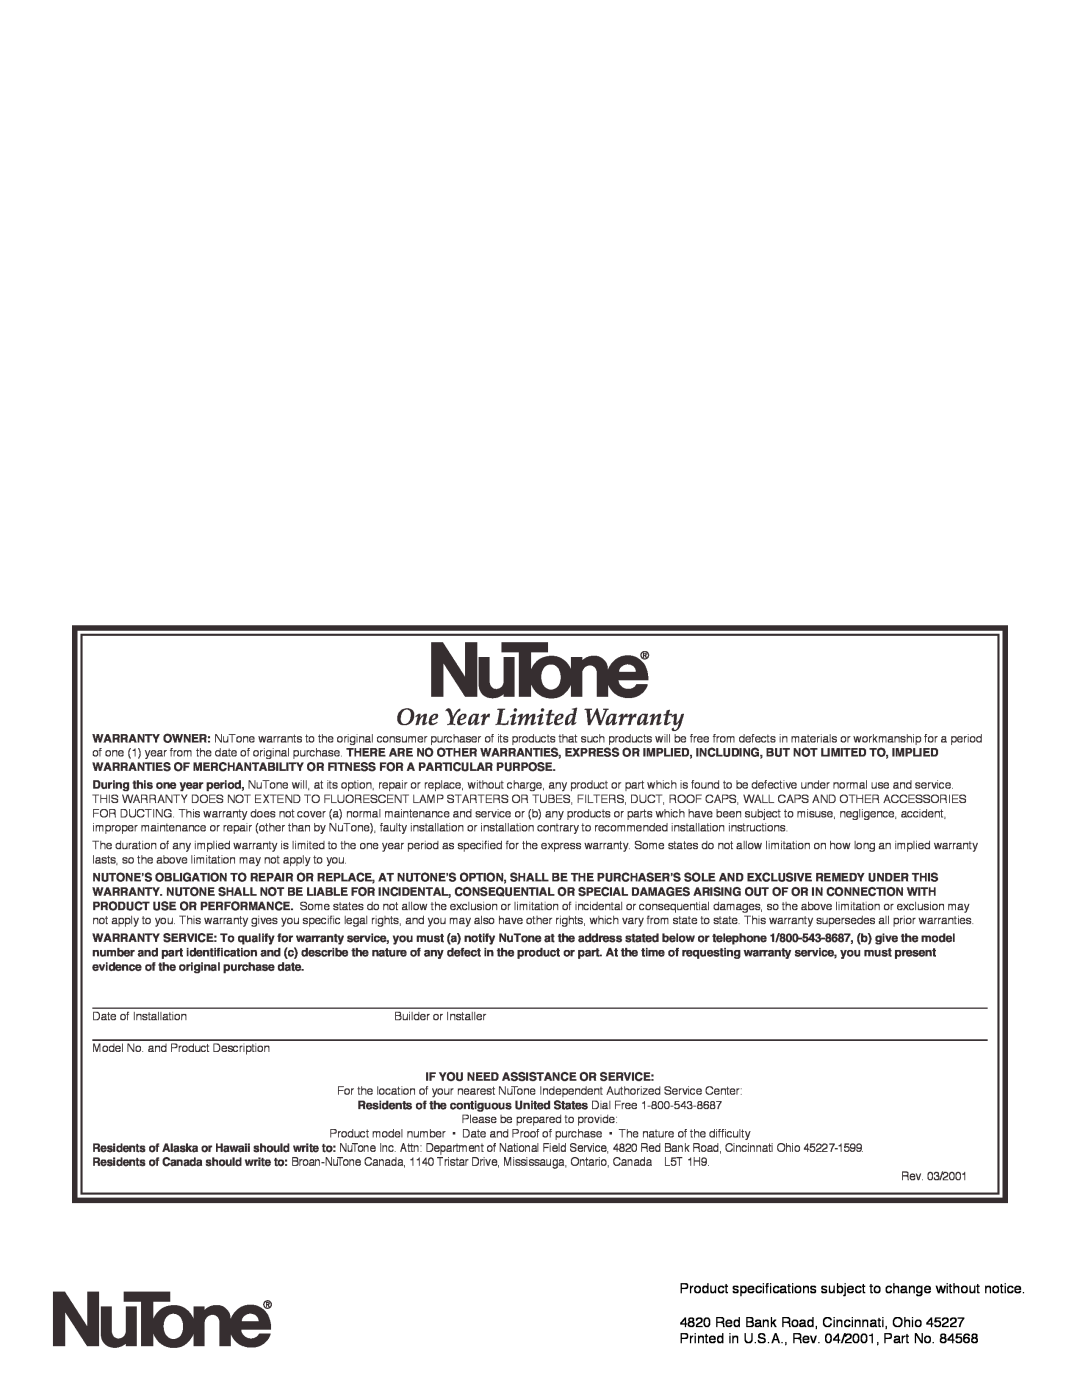 NuTone LB-14 installation instructions One Year Limited Warranty, Red Bank Road, Cincinnati, Ohio 